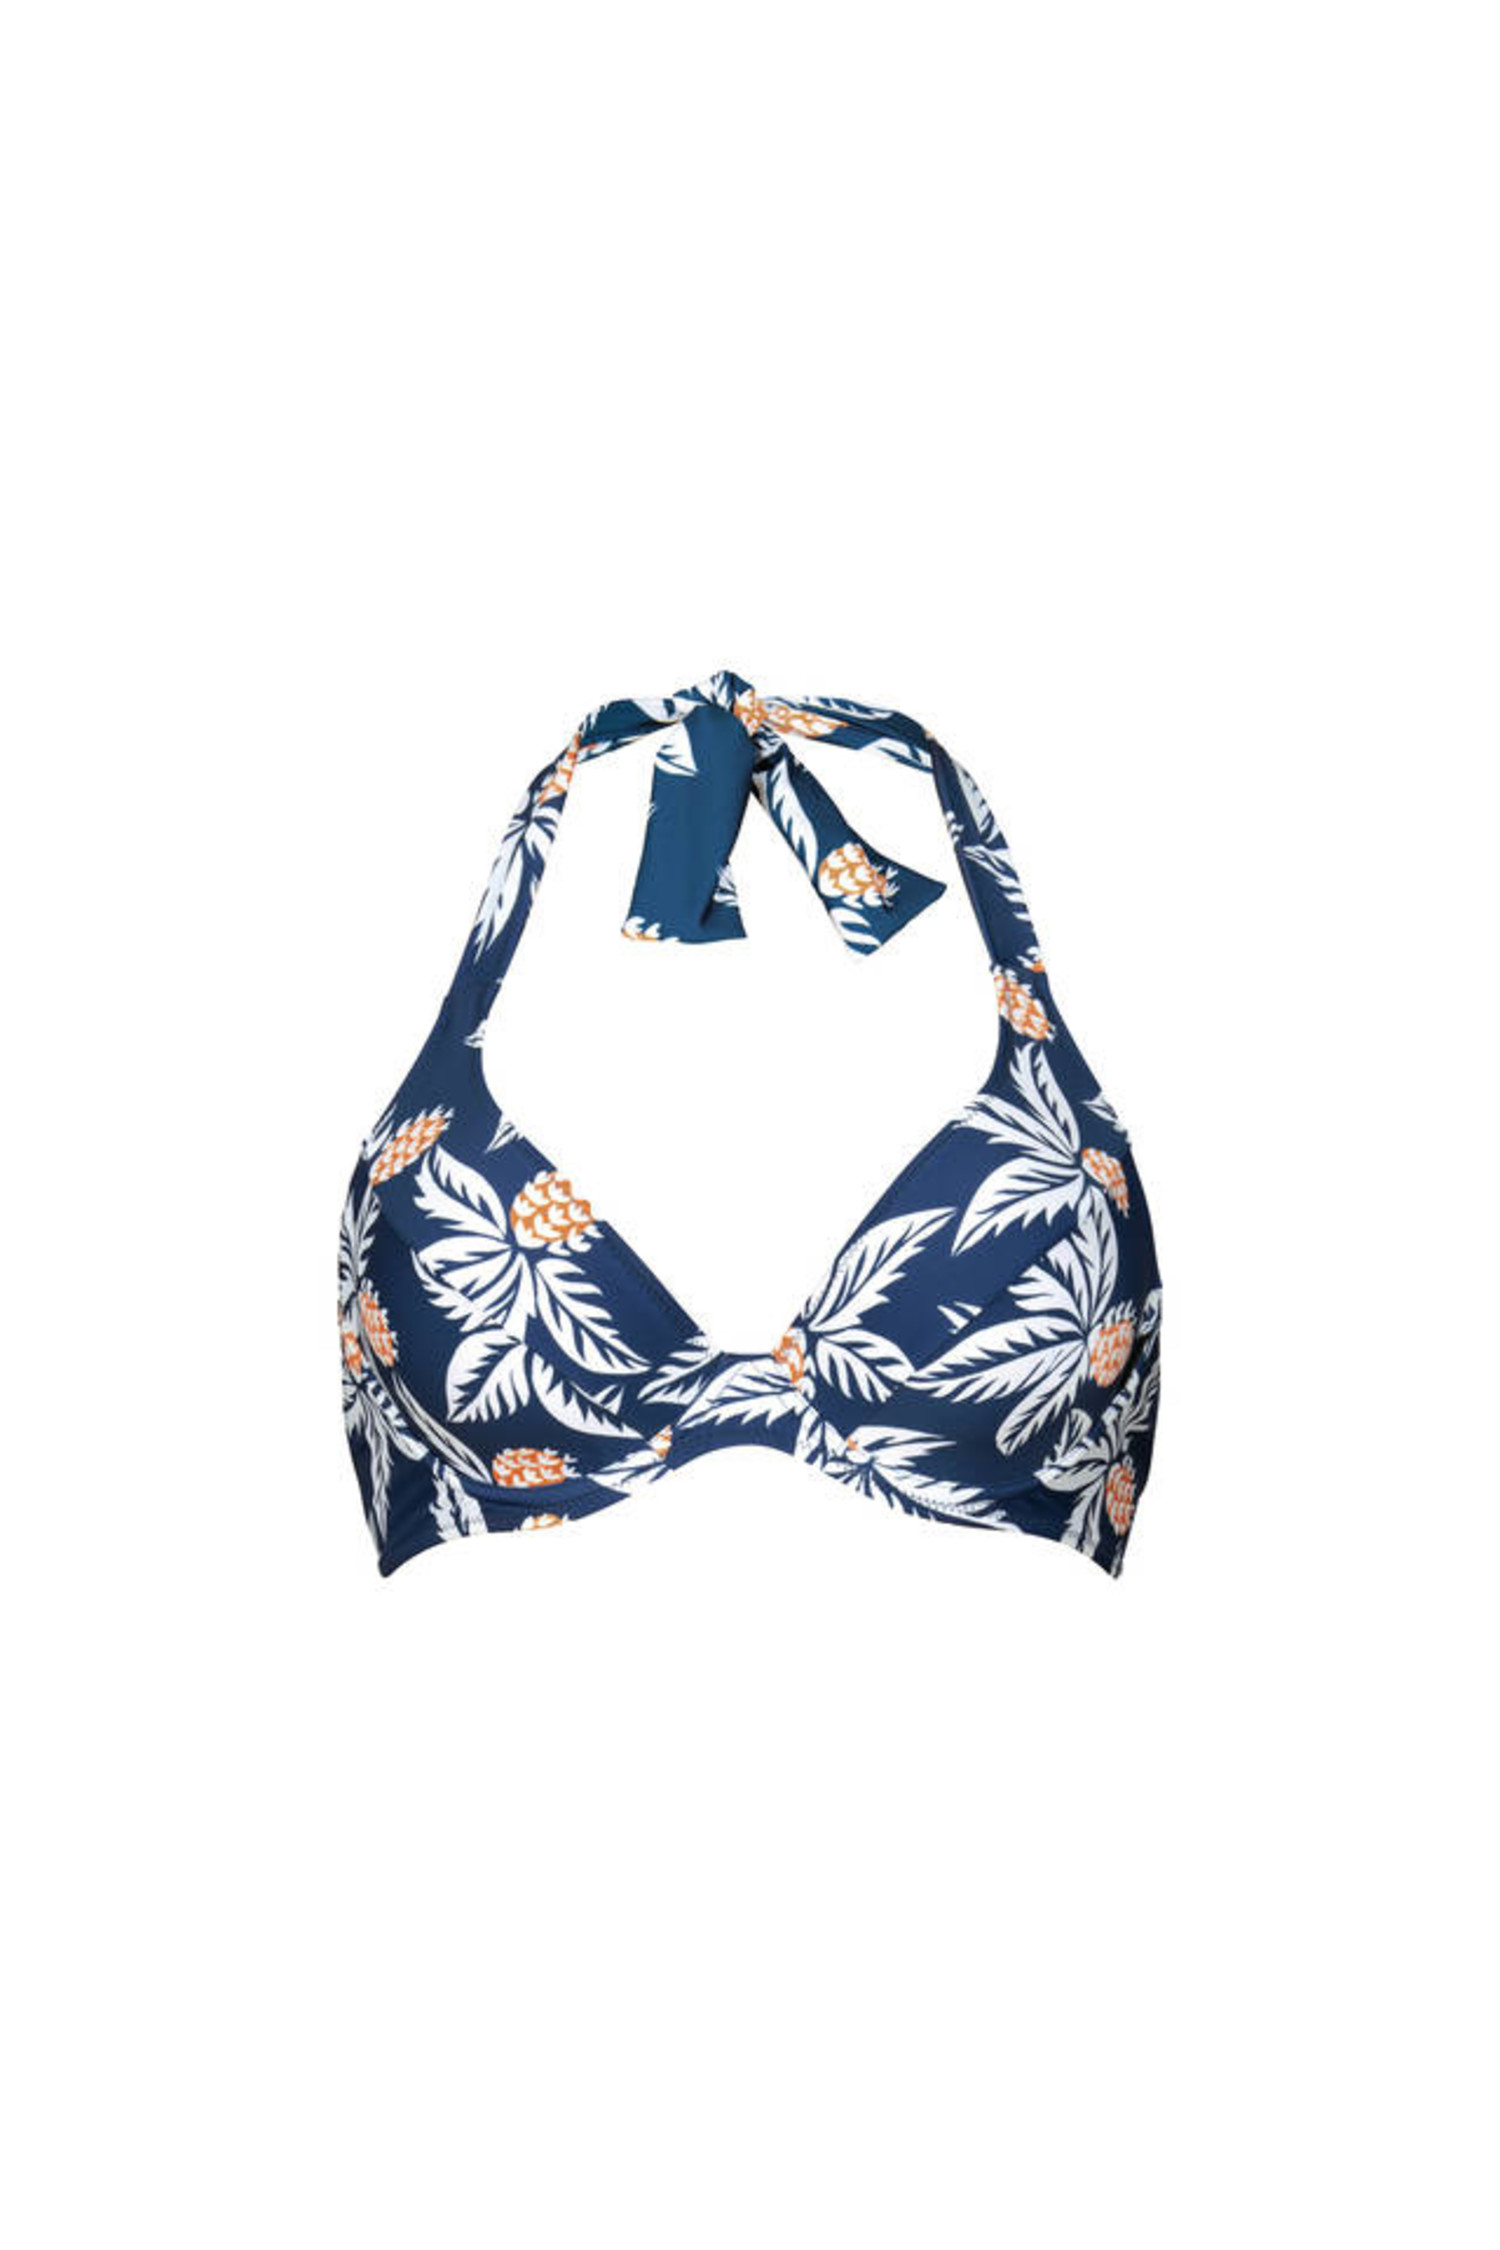 Amira Blue Beach Nice Bikini Top Blue Pineapples 8796-1 - Lace & Day